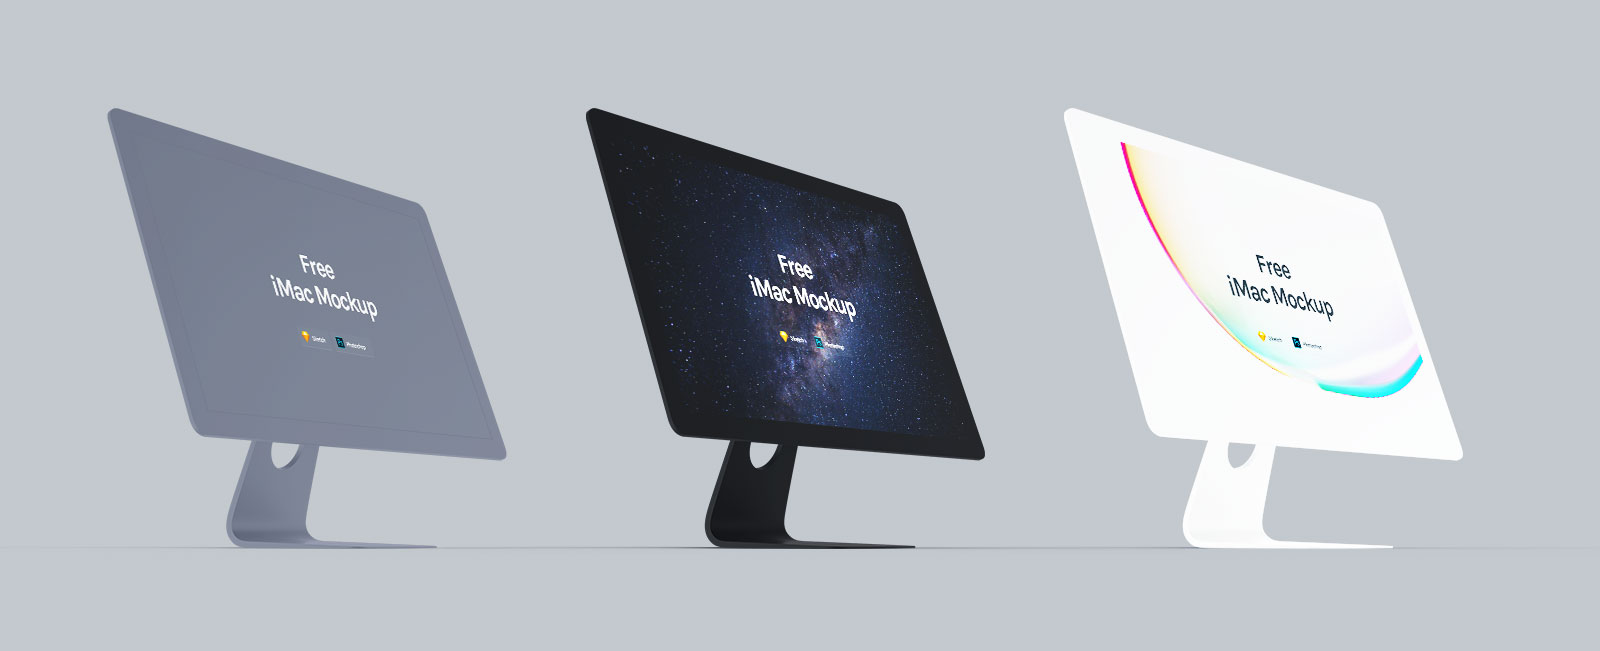 Download Design Free 3K iMac Mockup in PSD & Sketch - Desain Free